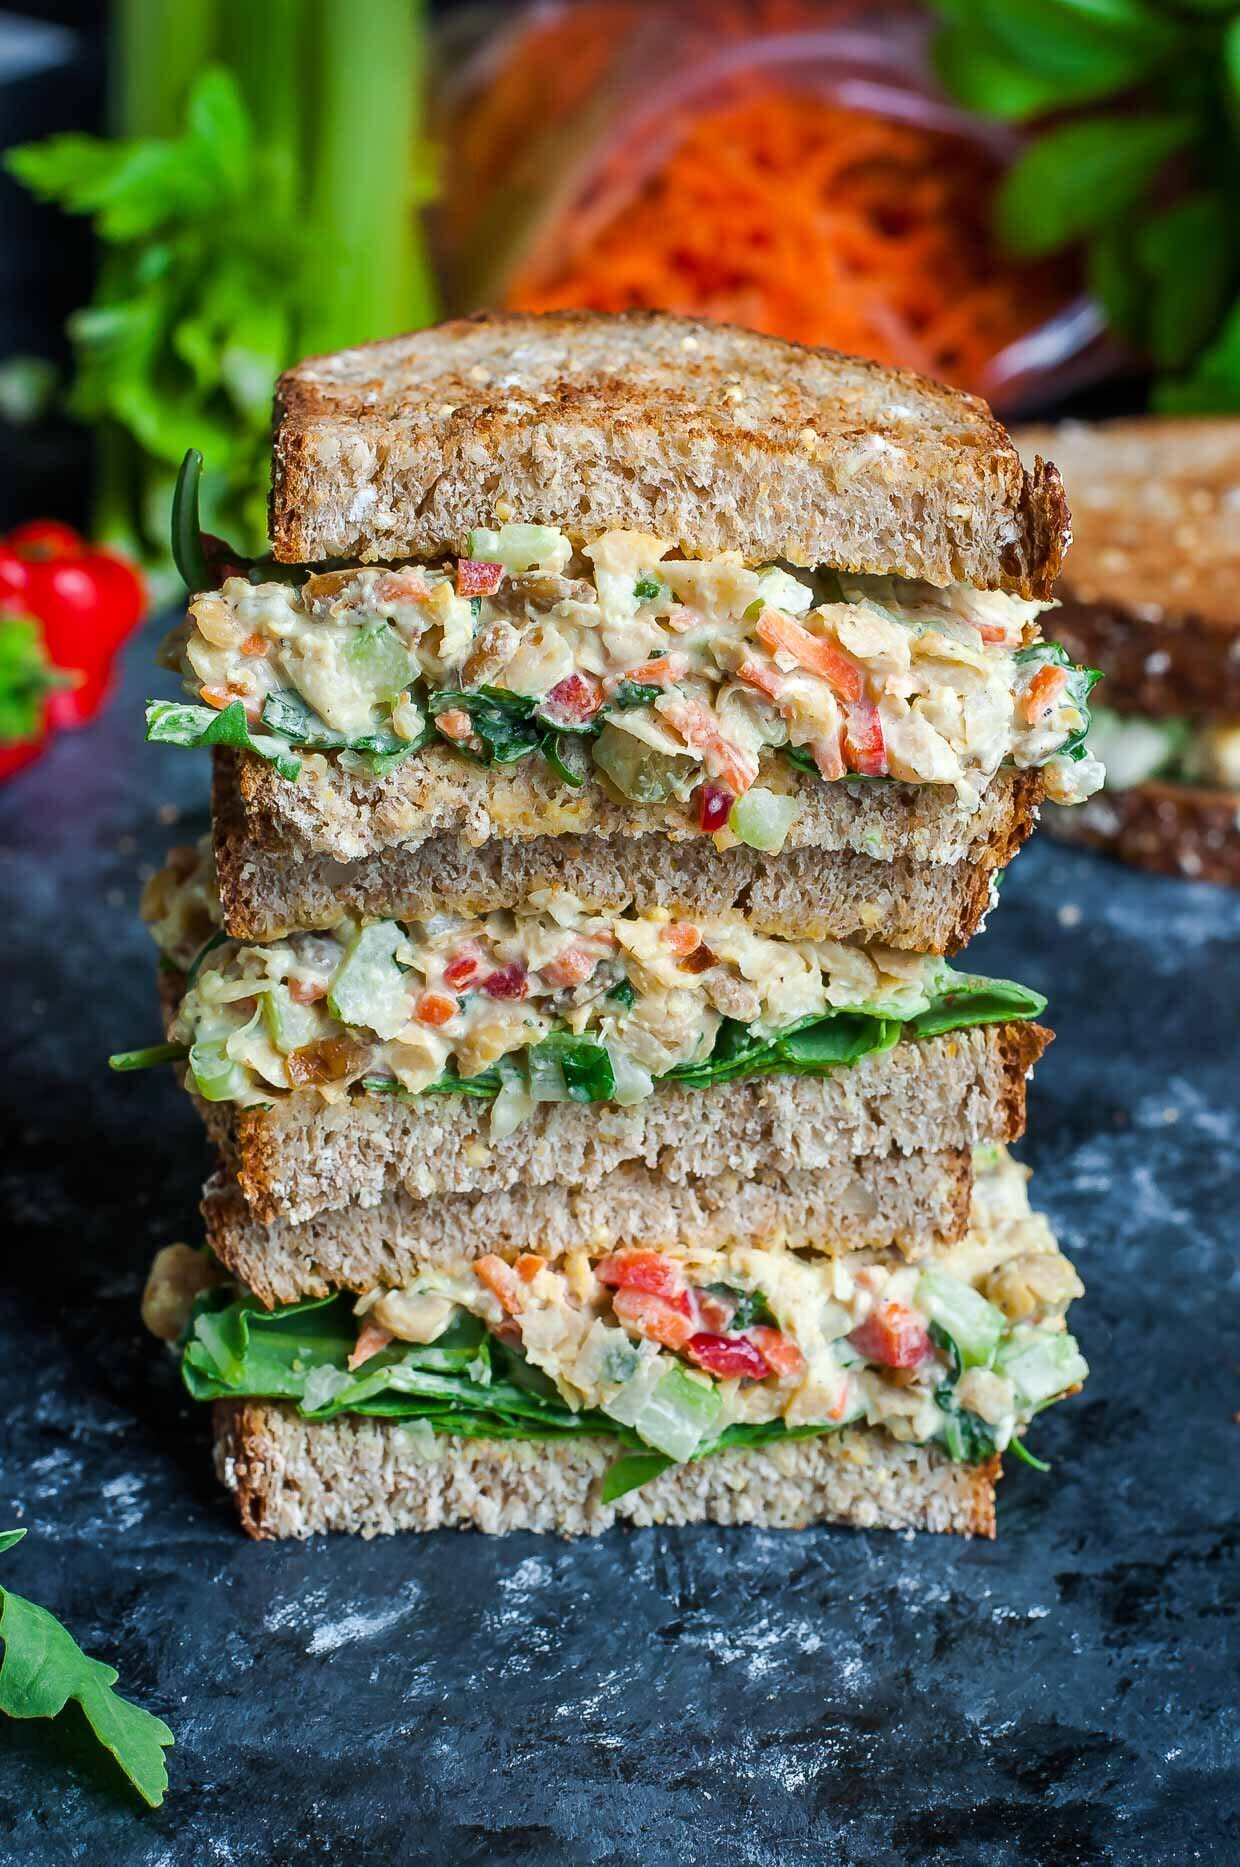 <strong><a href="https://peasandcrayons.com/2017/05/garden-veggie-chickpea-salad-sandwich.html" target="_blank" rel="noopener noreferrer">Get the Garden Vegetable Chickpea Salad Sandwich recipe from Peas and Crayons﻿</a></strong>